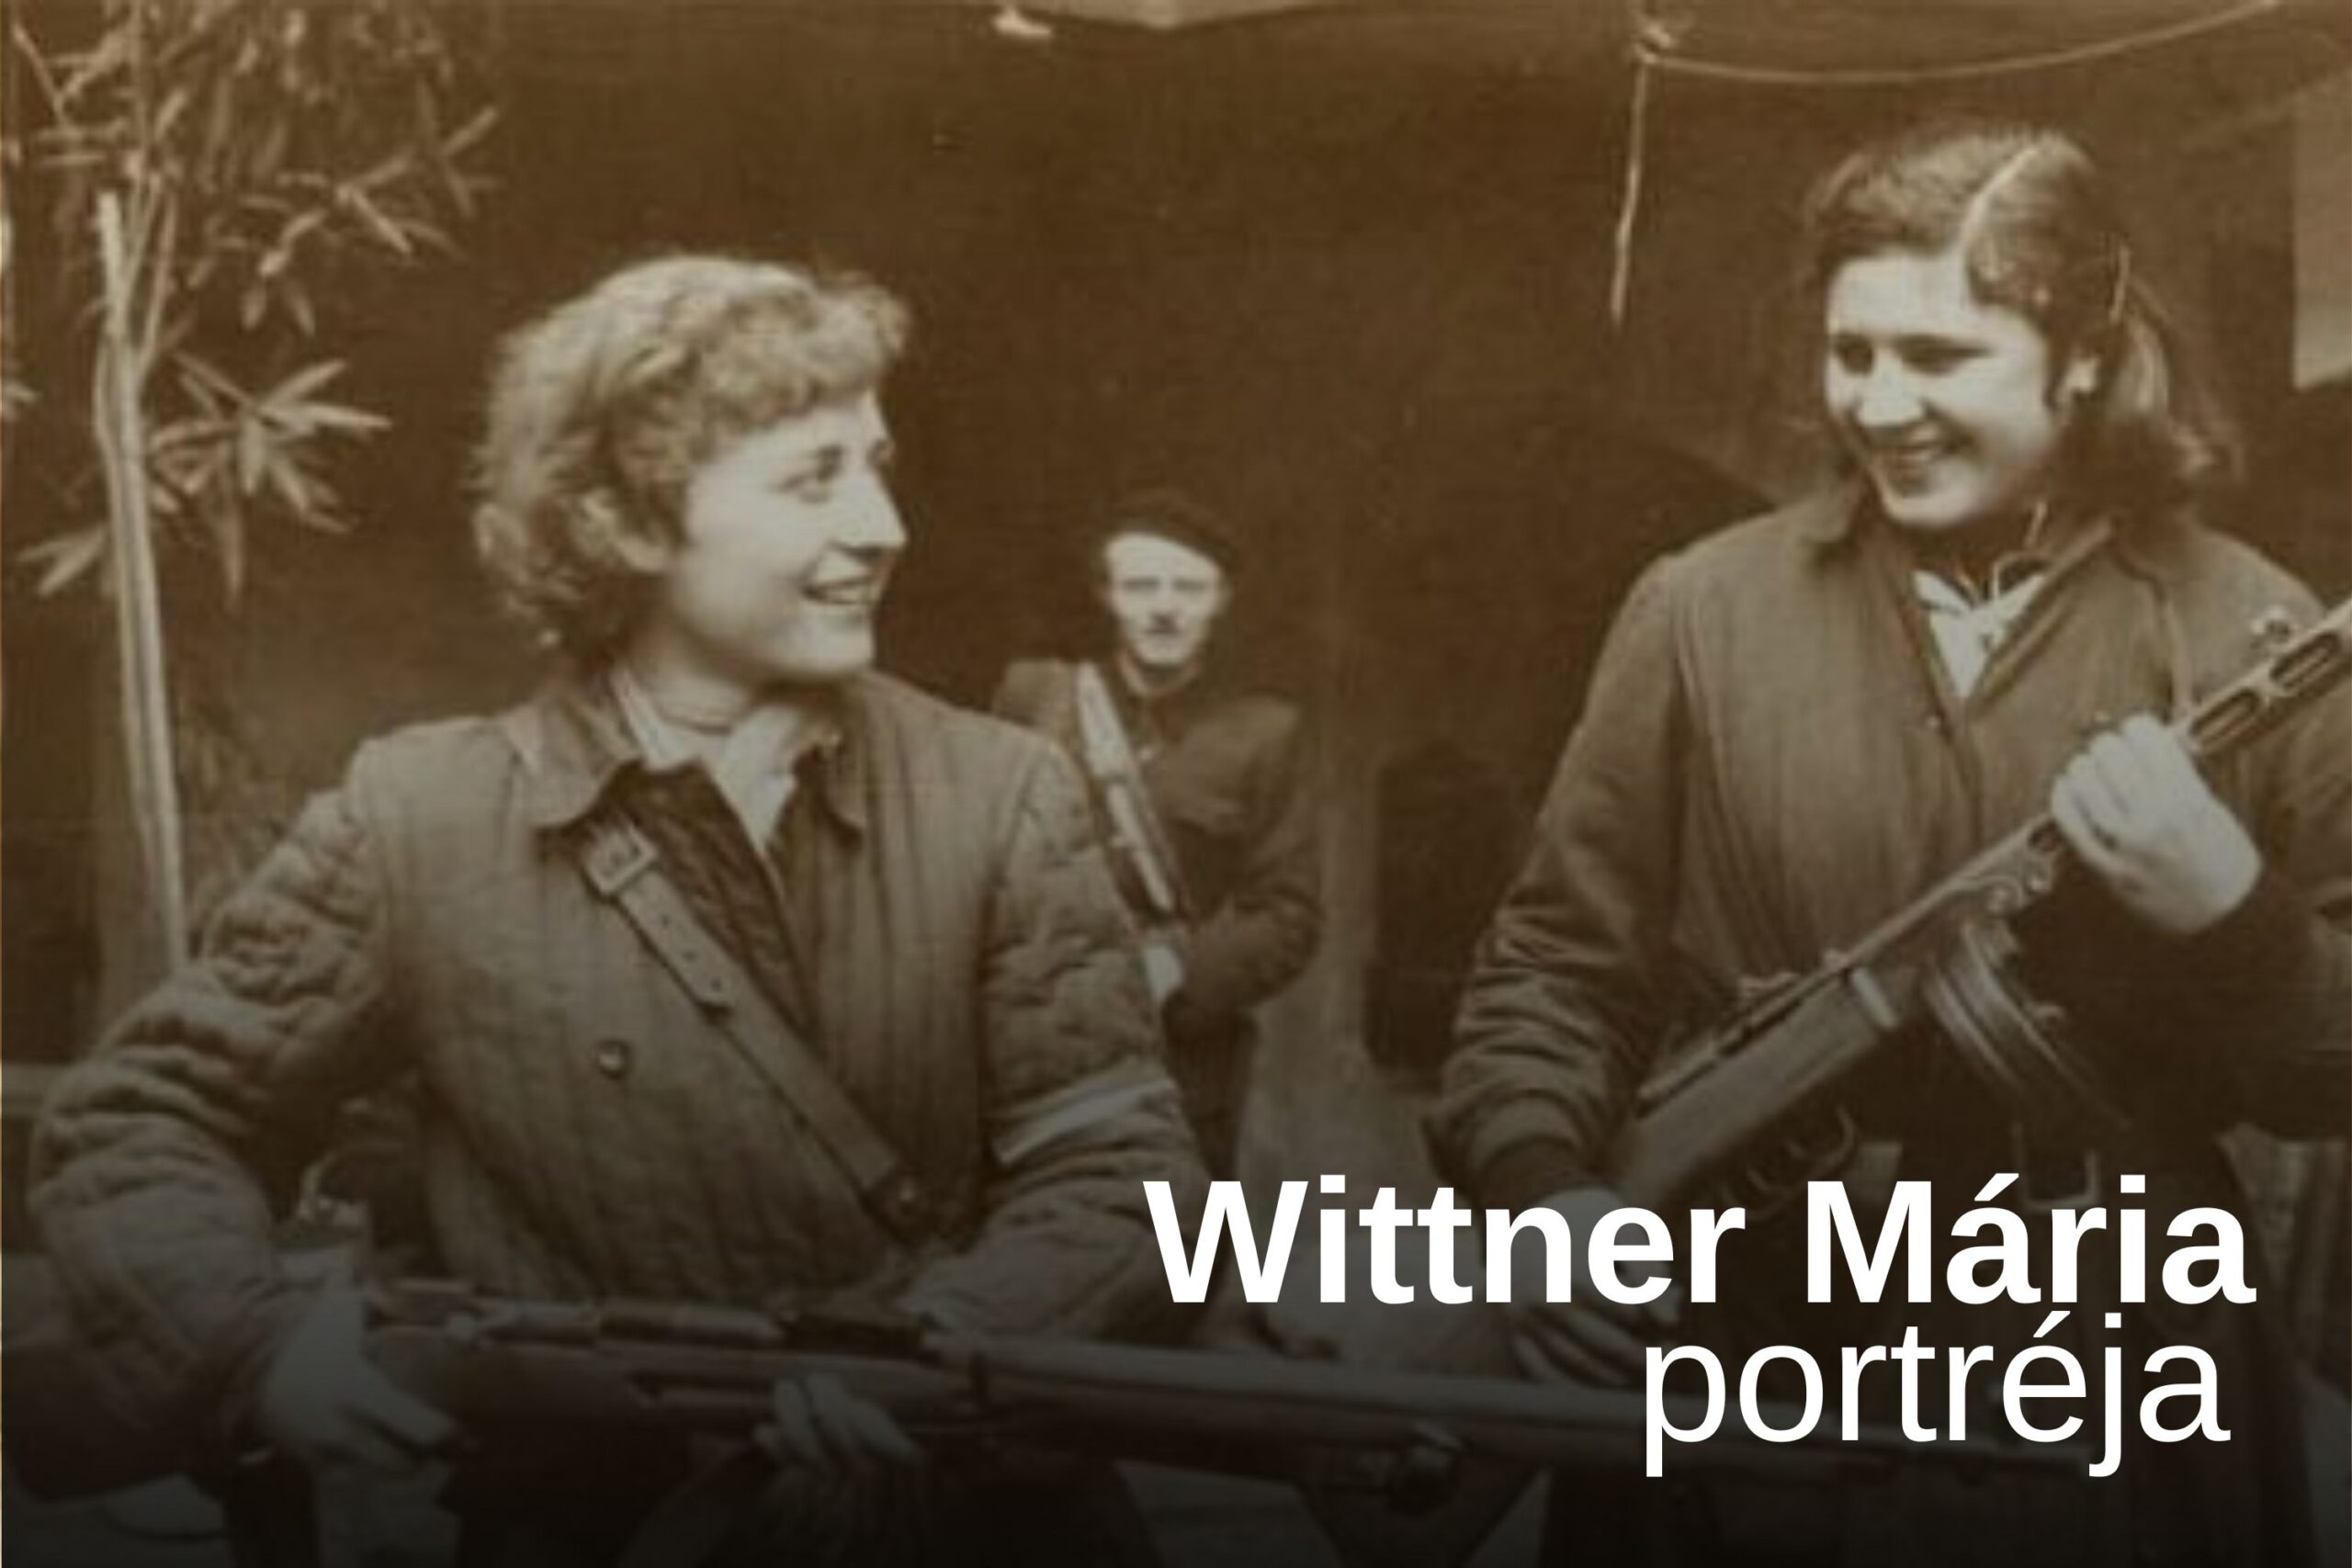 Wittner Mária: Körberöhögtem mindenkit: halálra ítéltek!